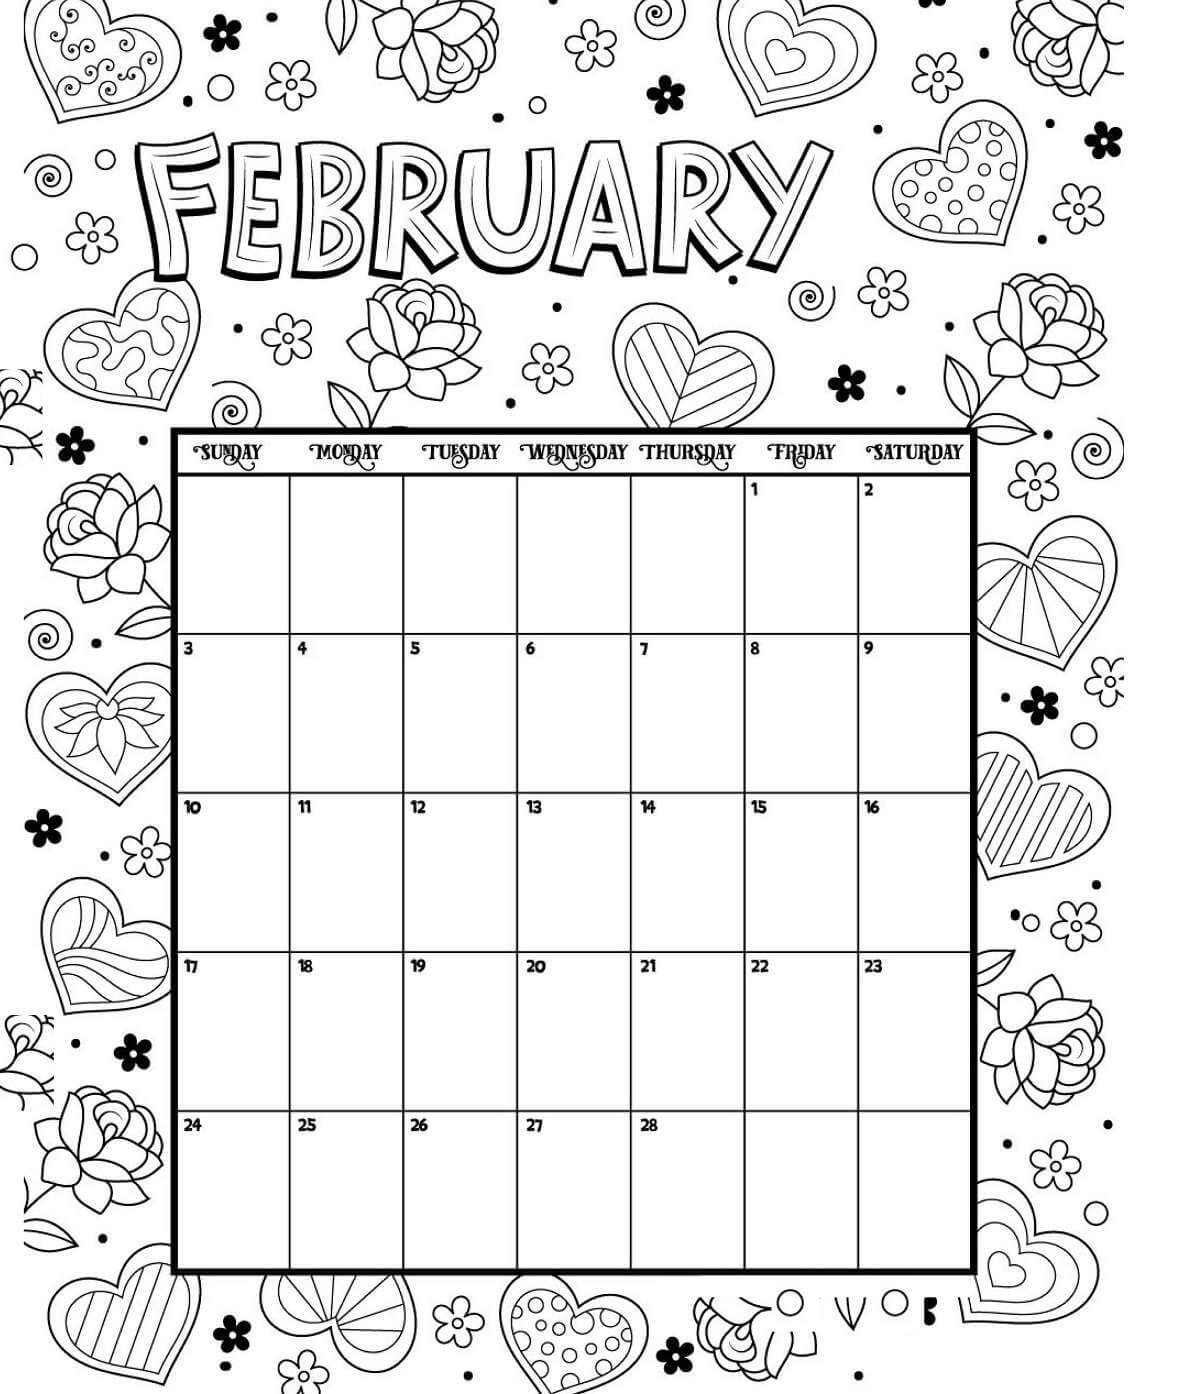 February Coloring Calendar Valentines